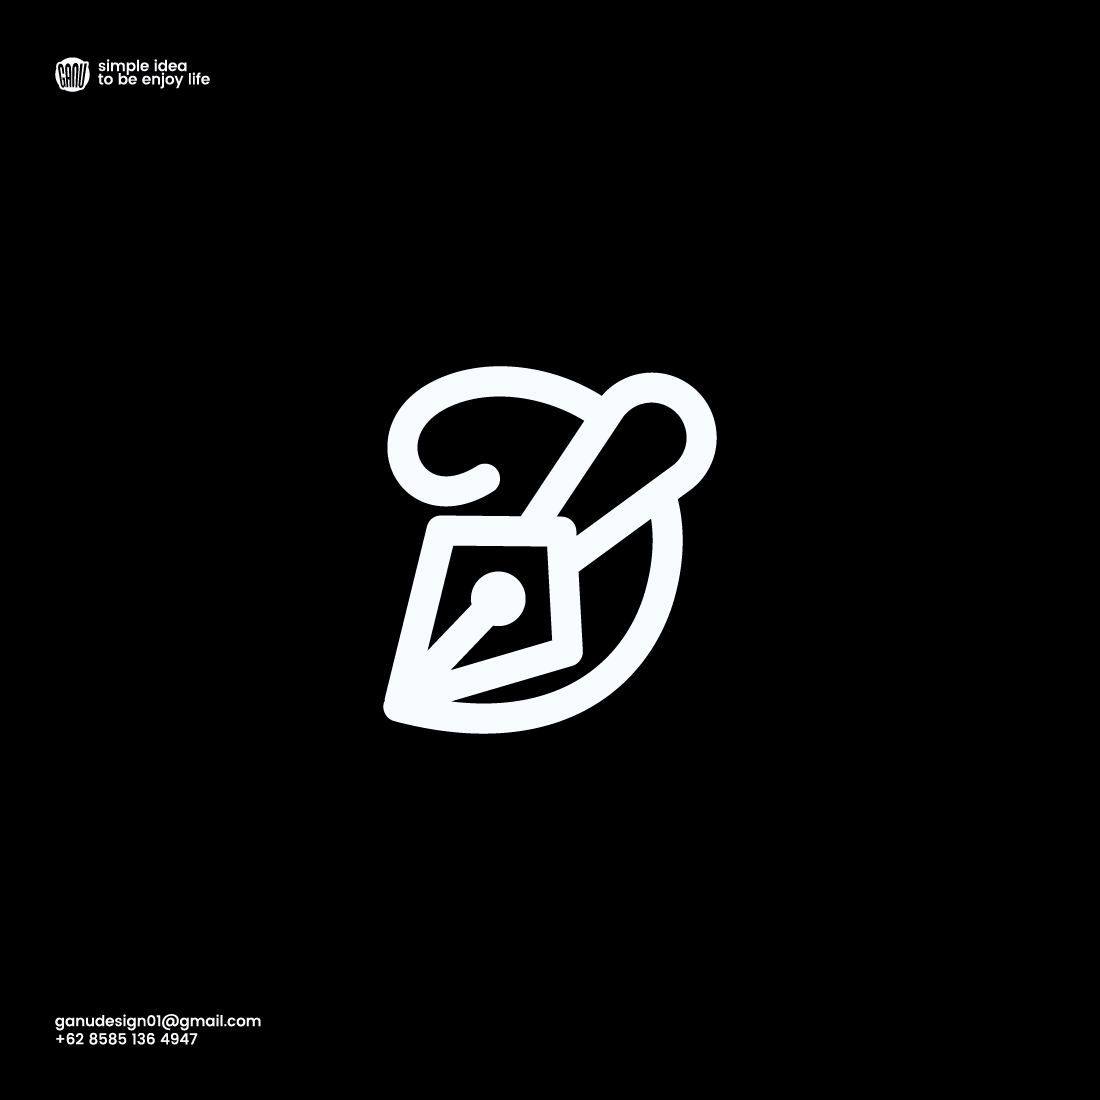 D letter logo with Pen design cover image.